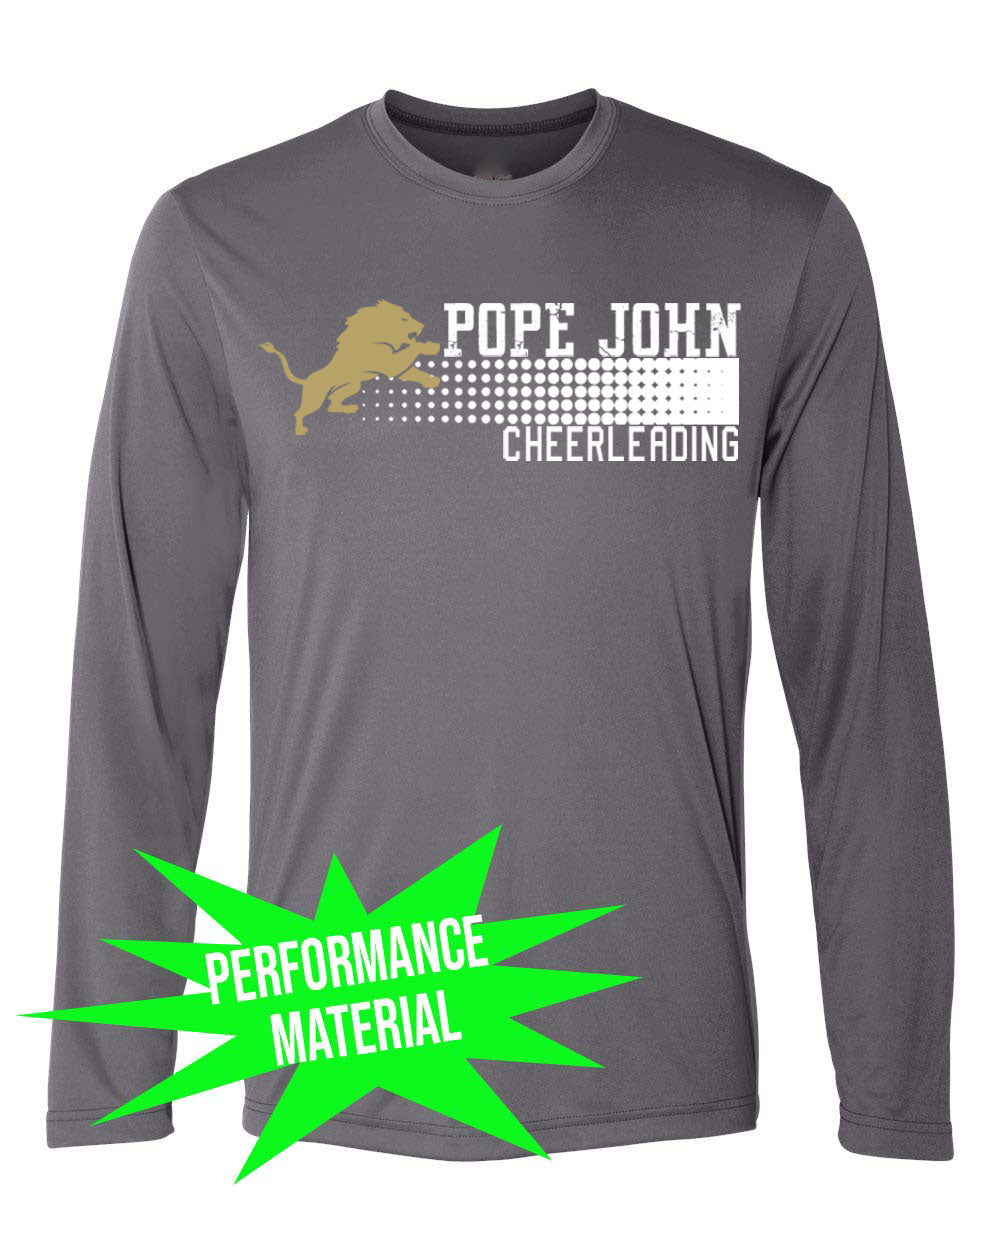 Pope John Cheer Performance Material Design 4 Long Sleeve Shirt